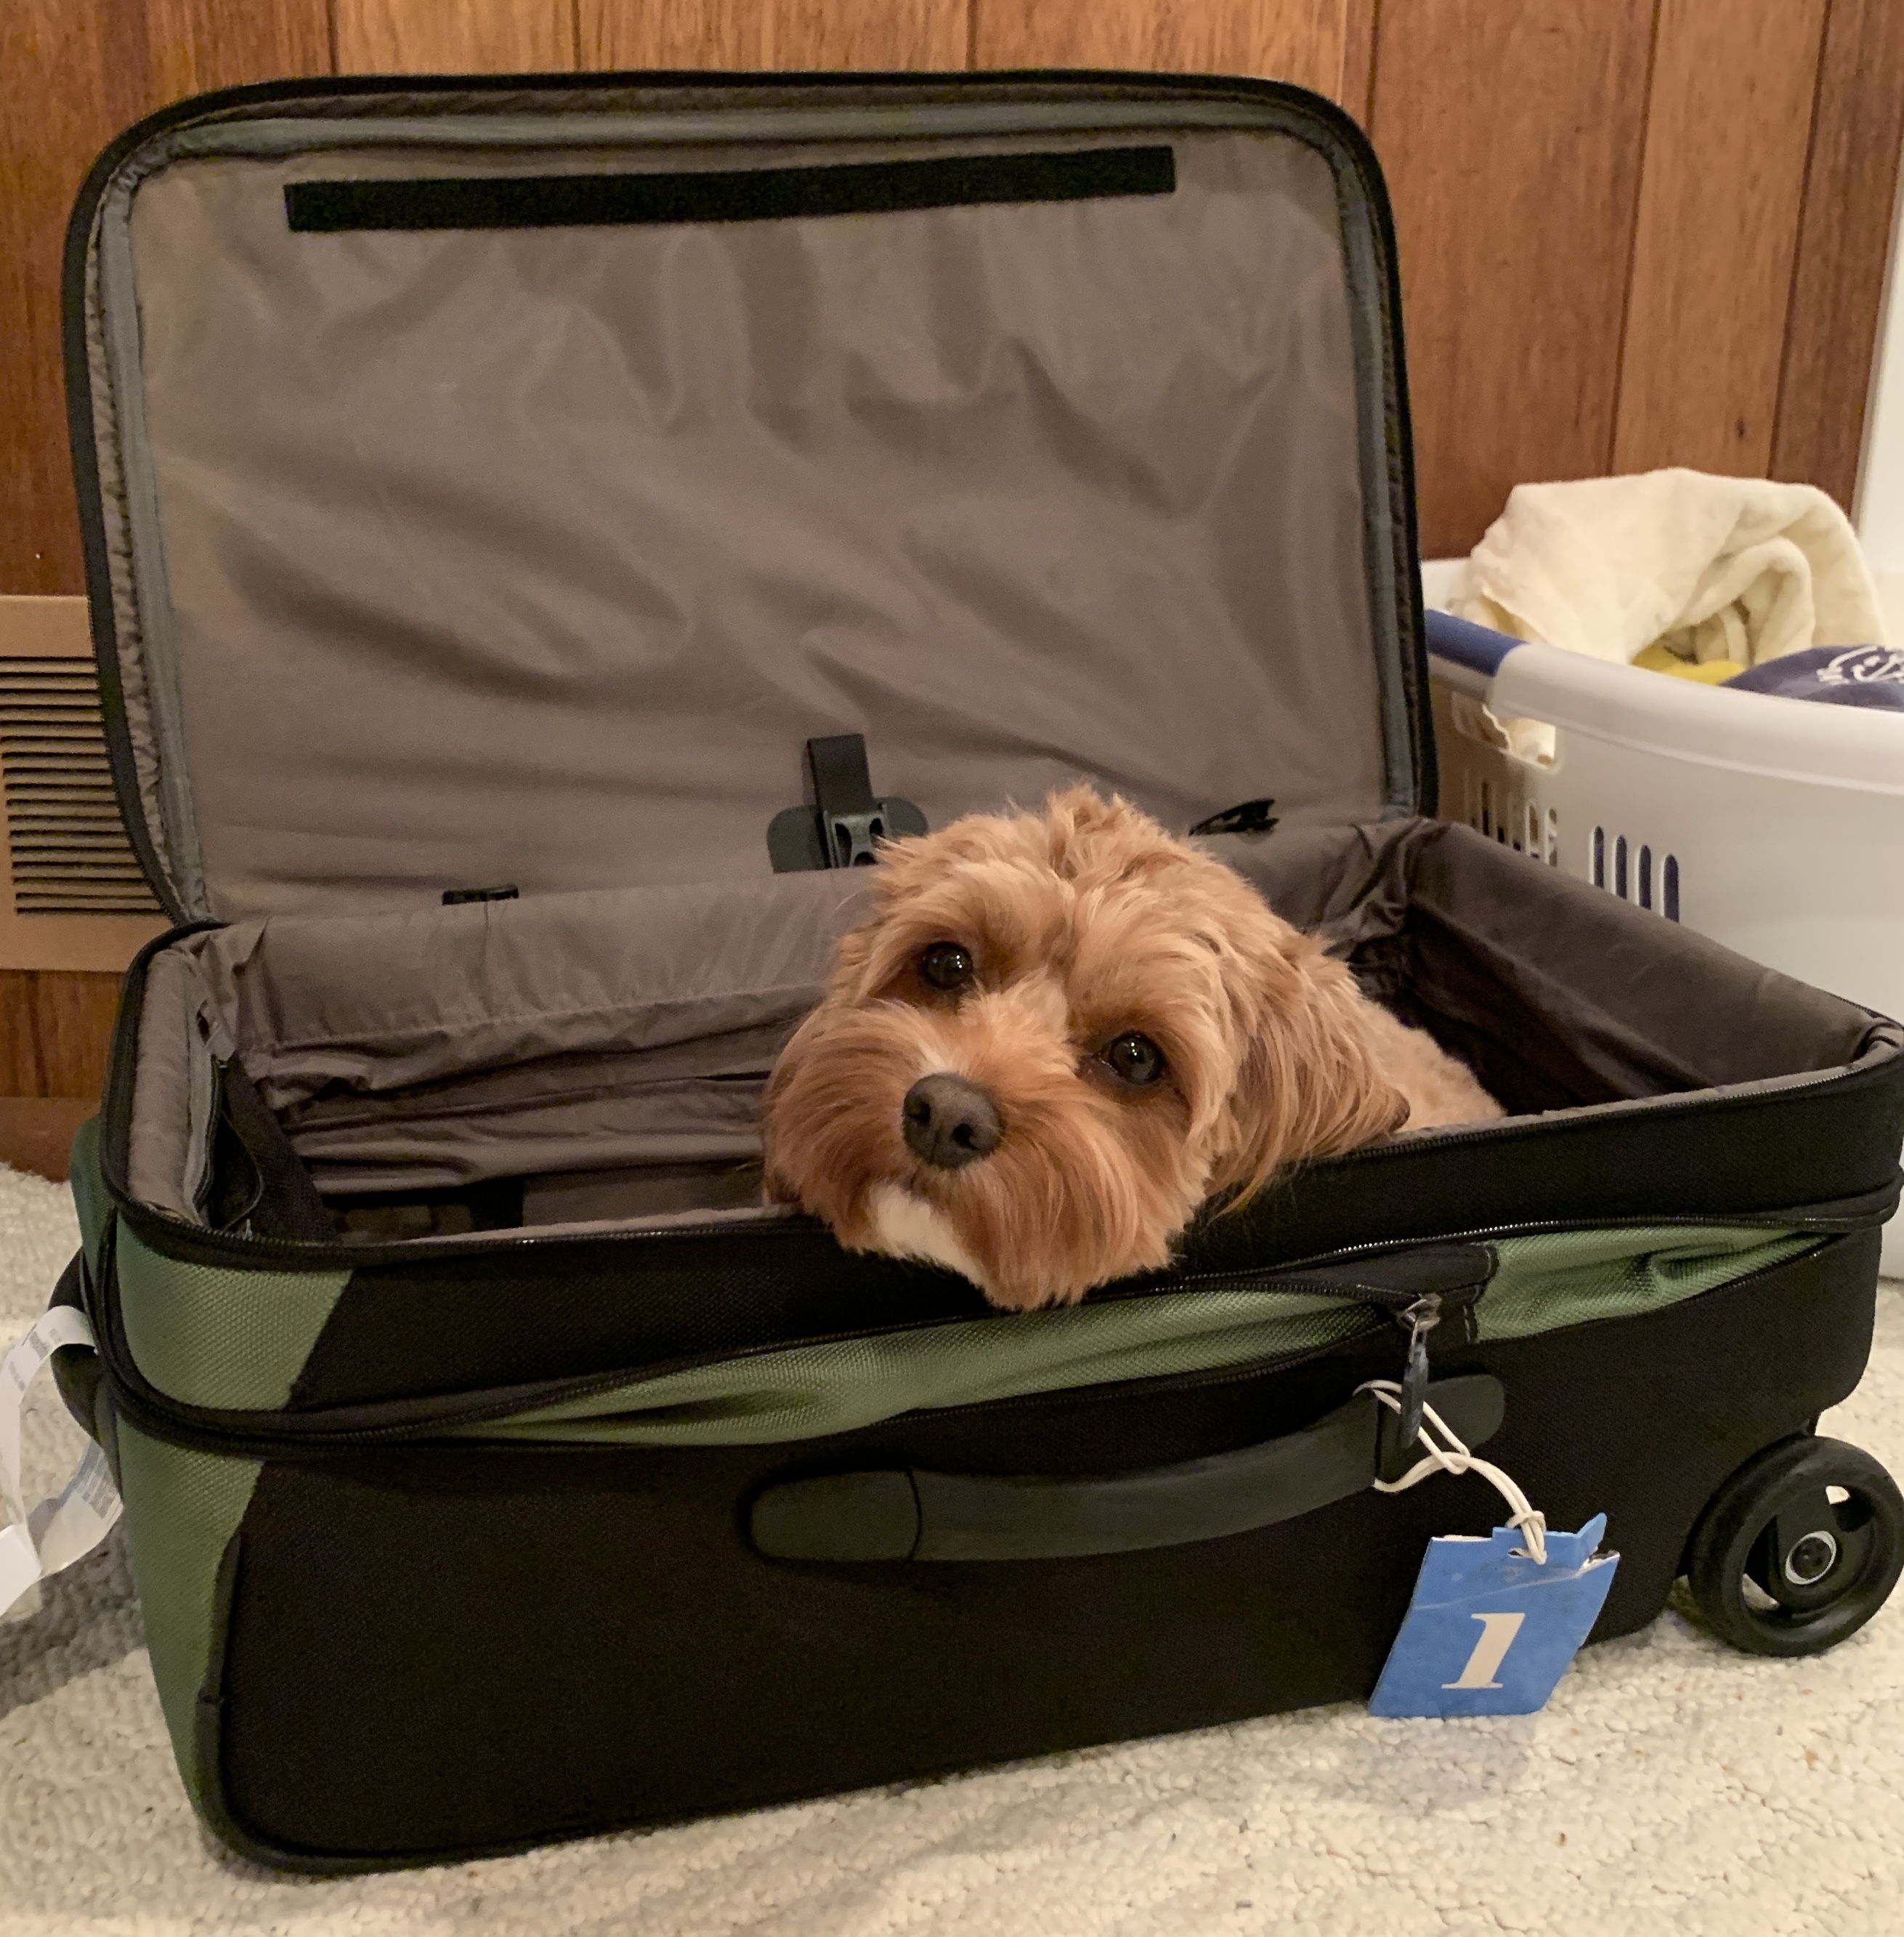 Rosie in her suitcase.